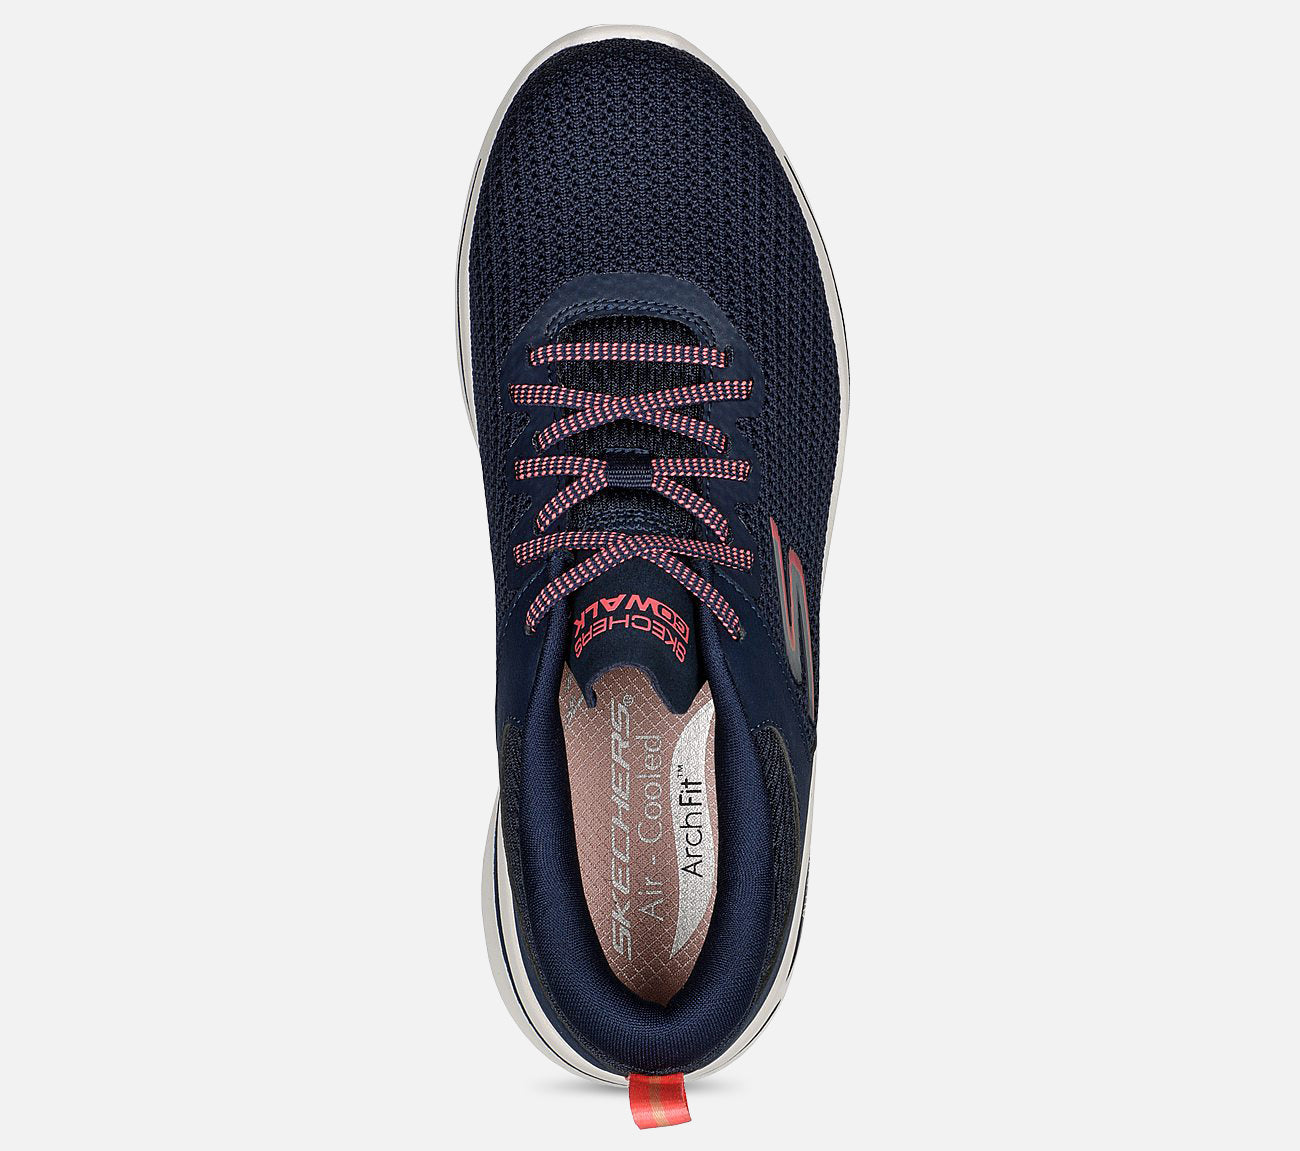 GO WALK Arch Fit - Vibrant Look Shoe Skechers